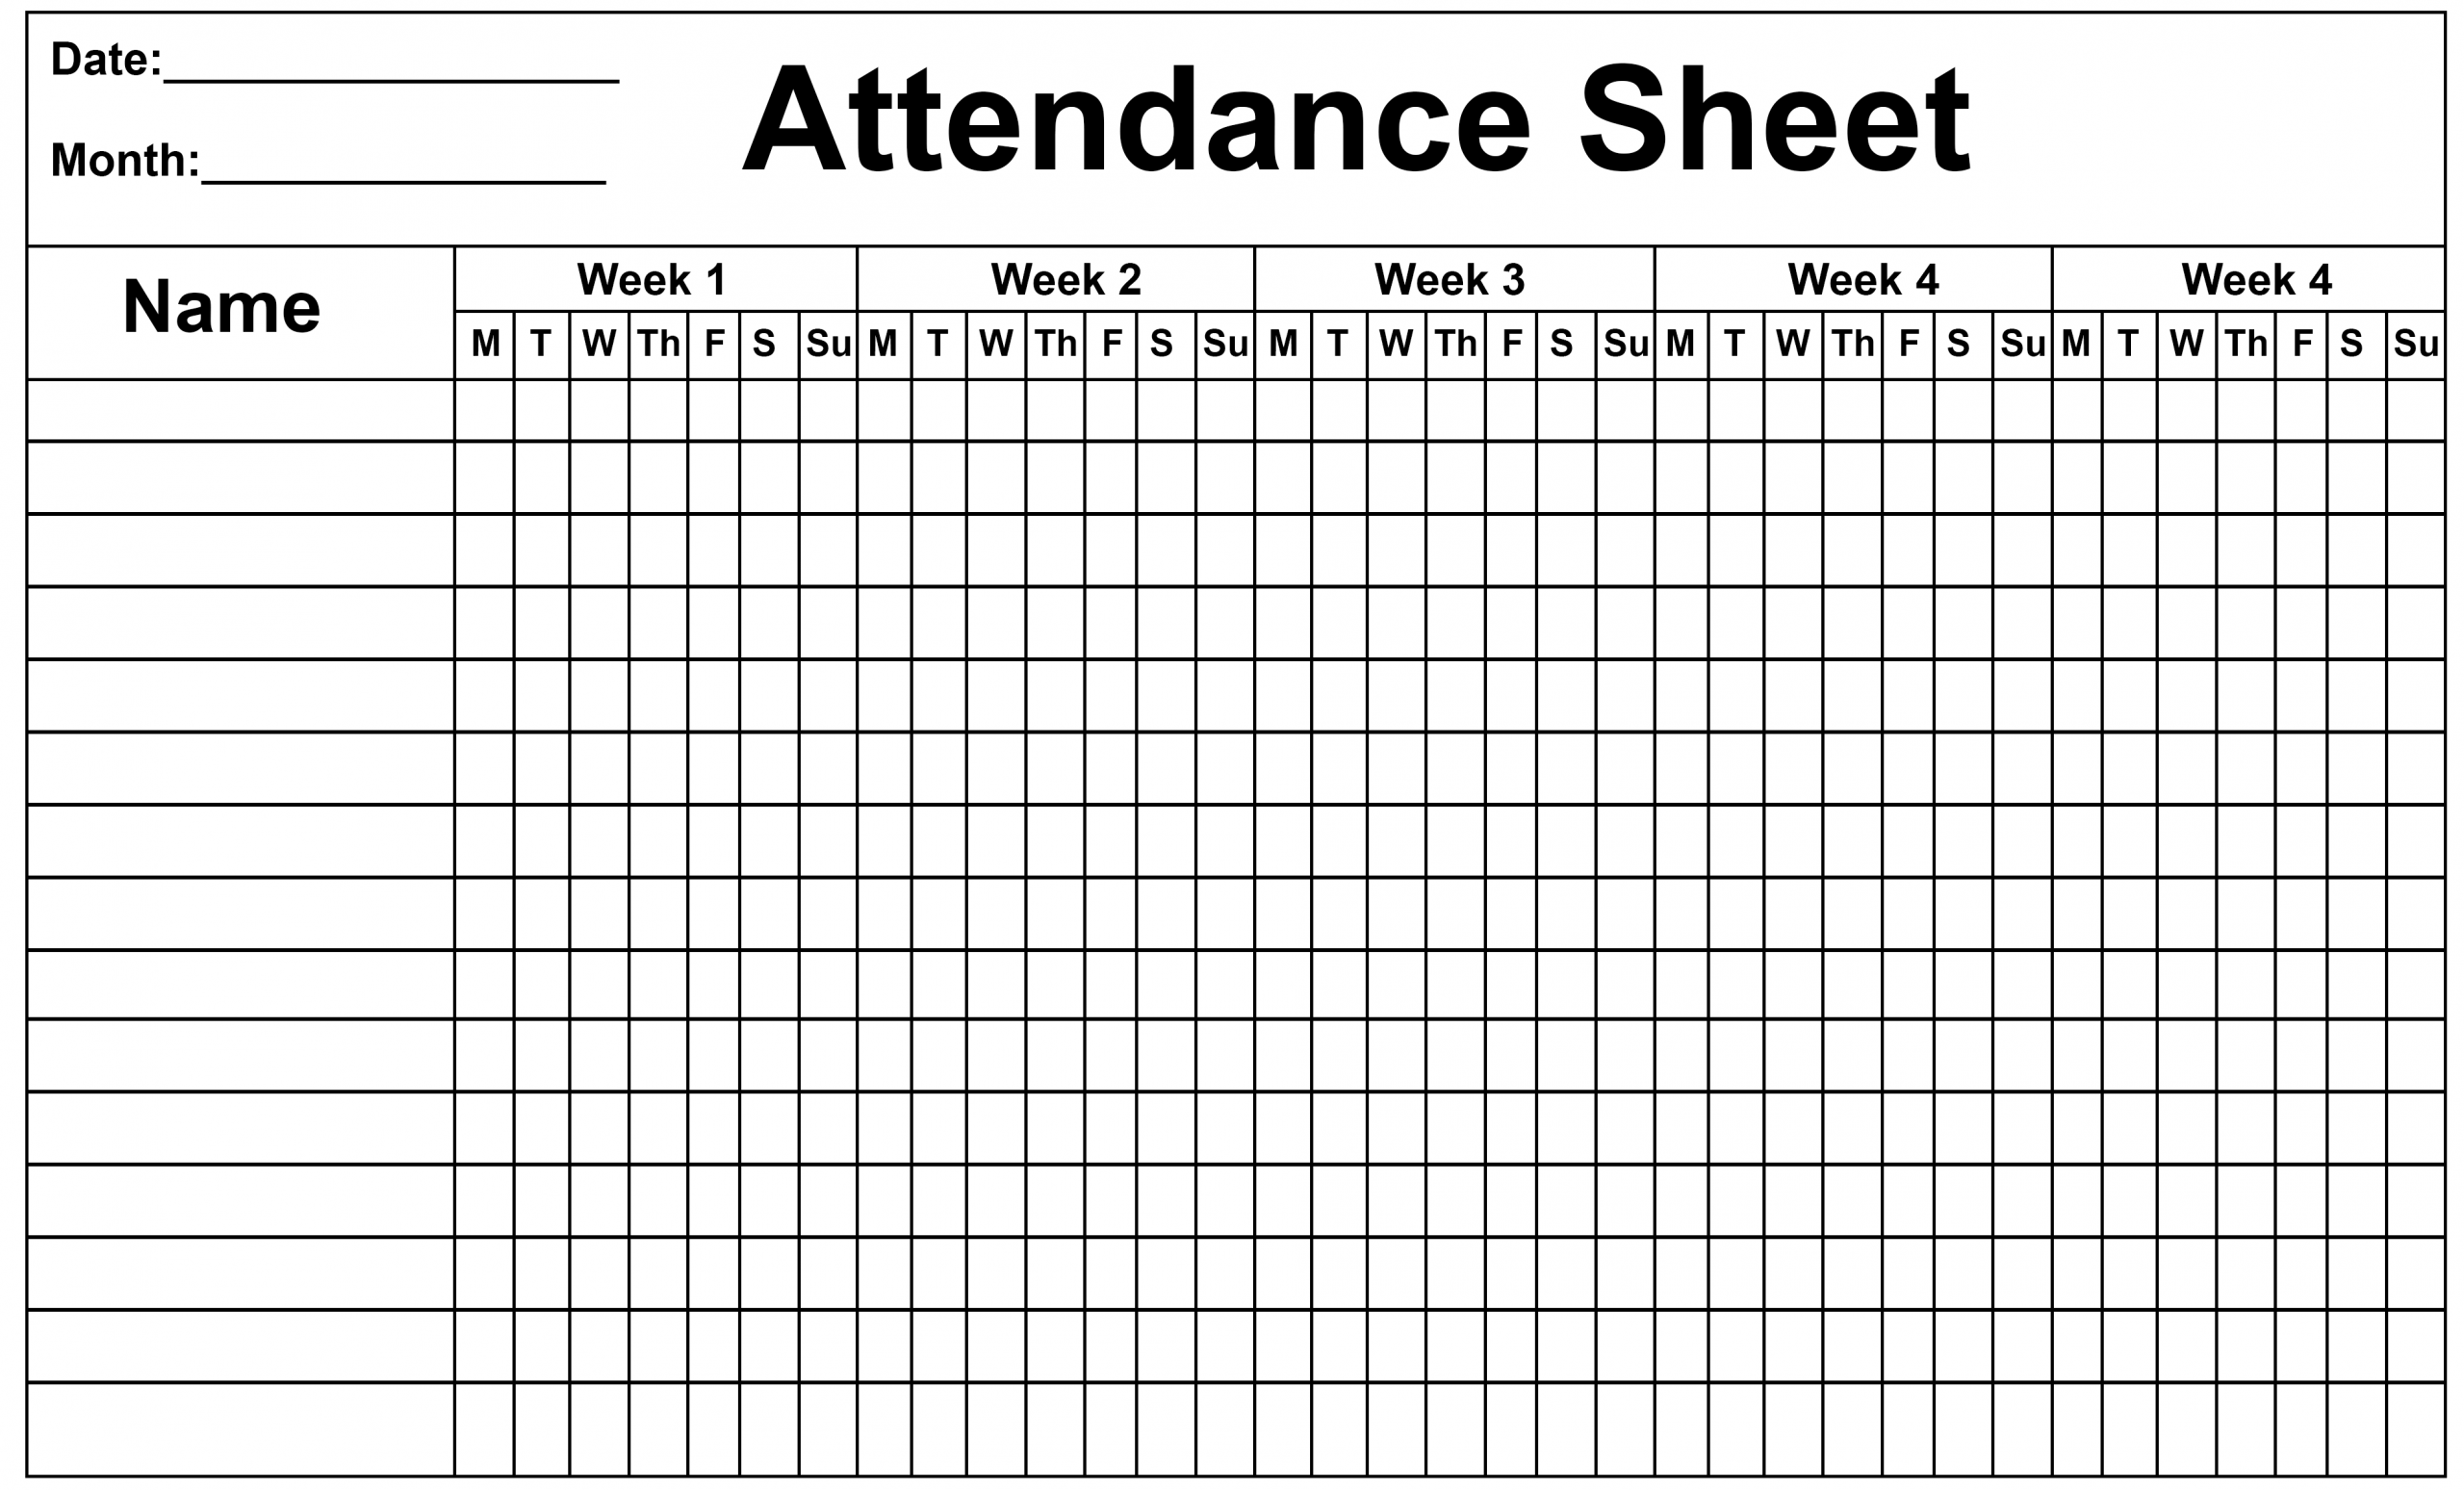 Employee Attendance Sheet Calendar Tracker Template In Pdf